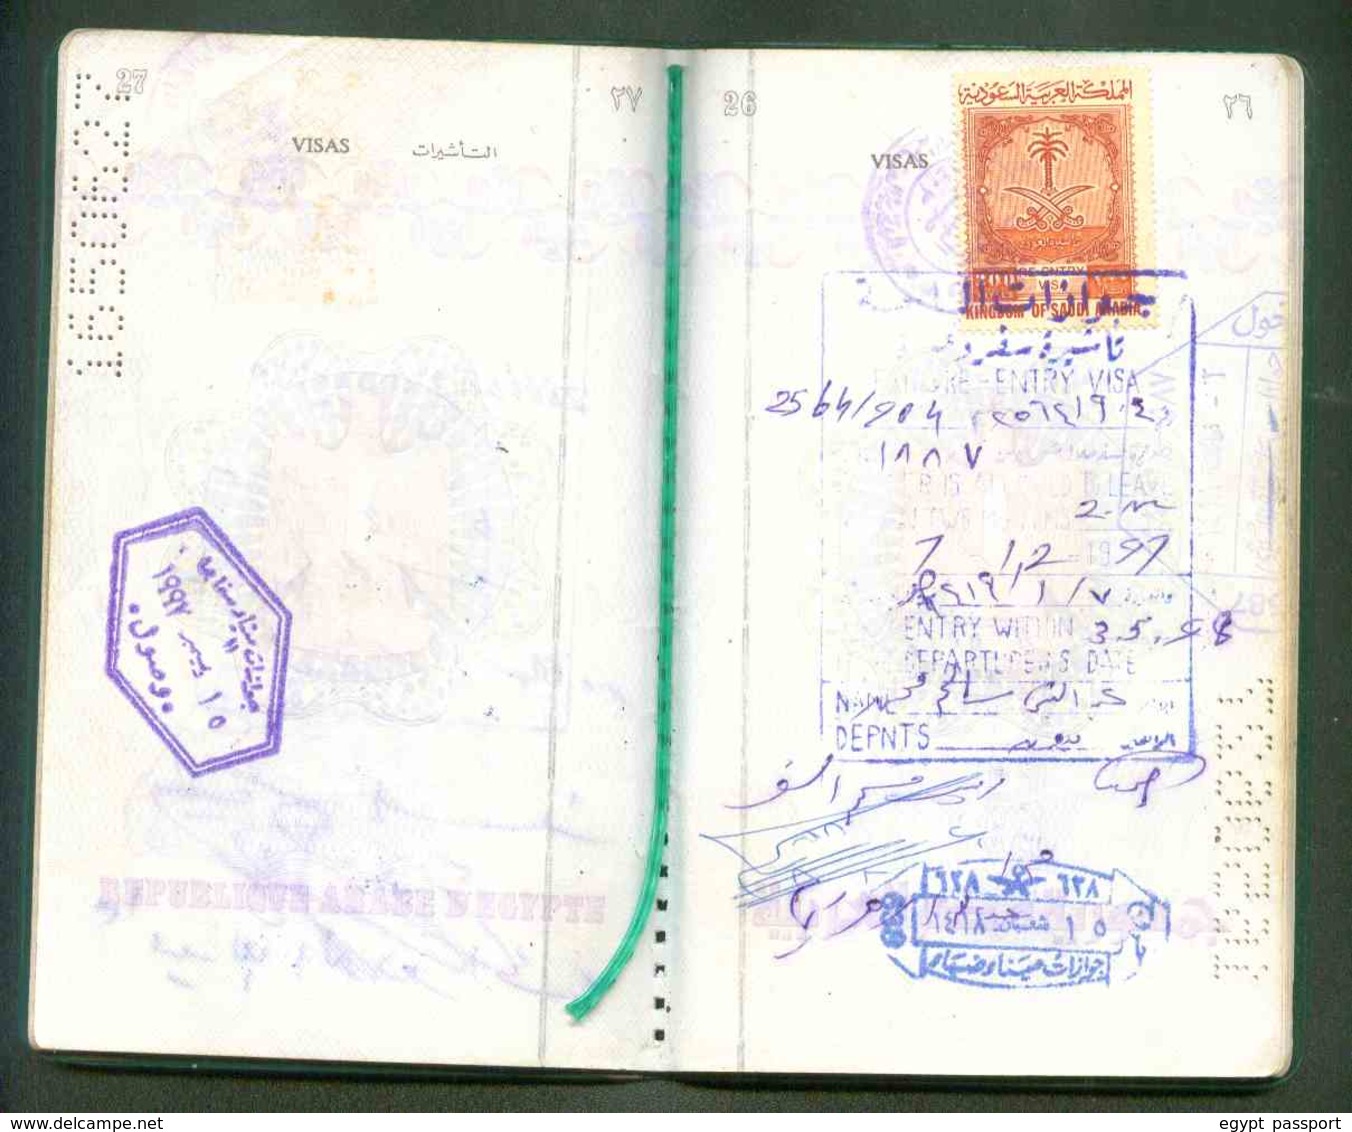 Egypt Passport Issue 1997 - Visa Saudi Arabia - Conditiona as in scan